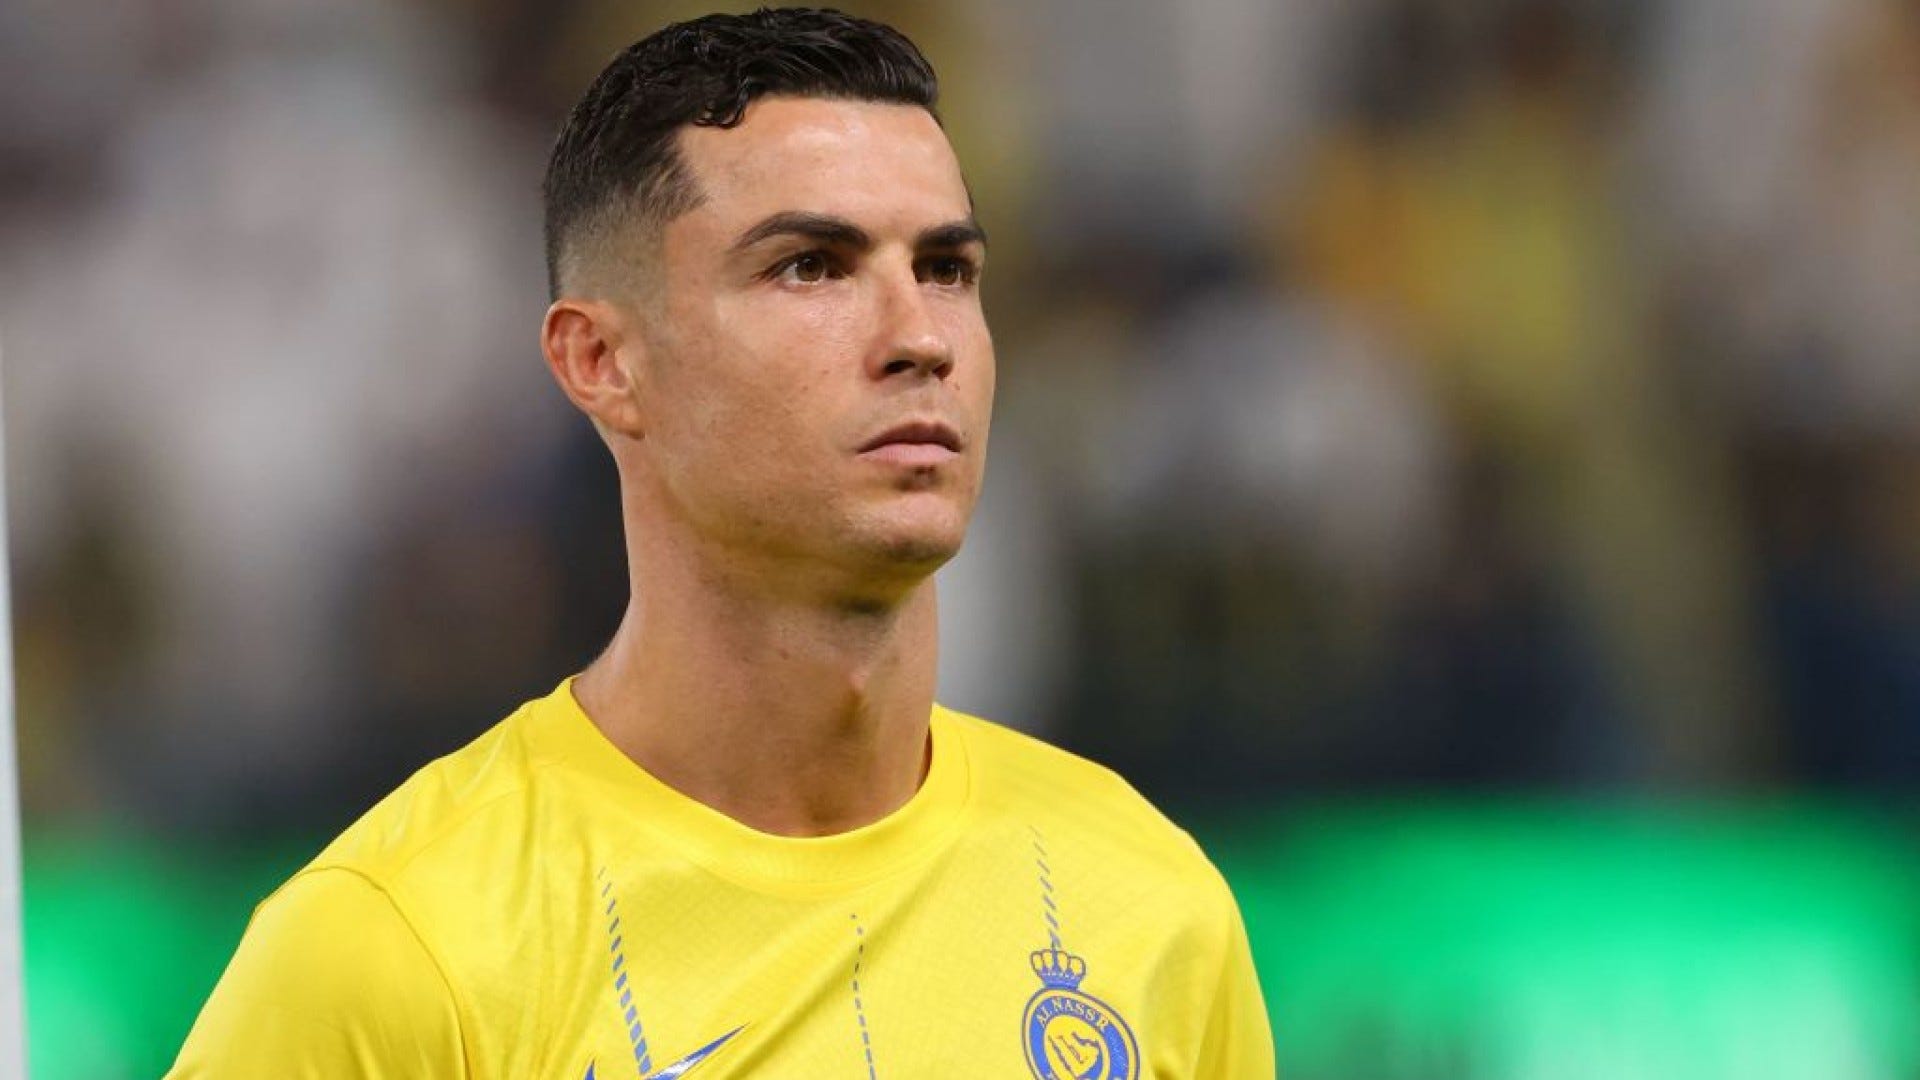 Ronaldo set for staggering $313m-per-year mega-transfer